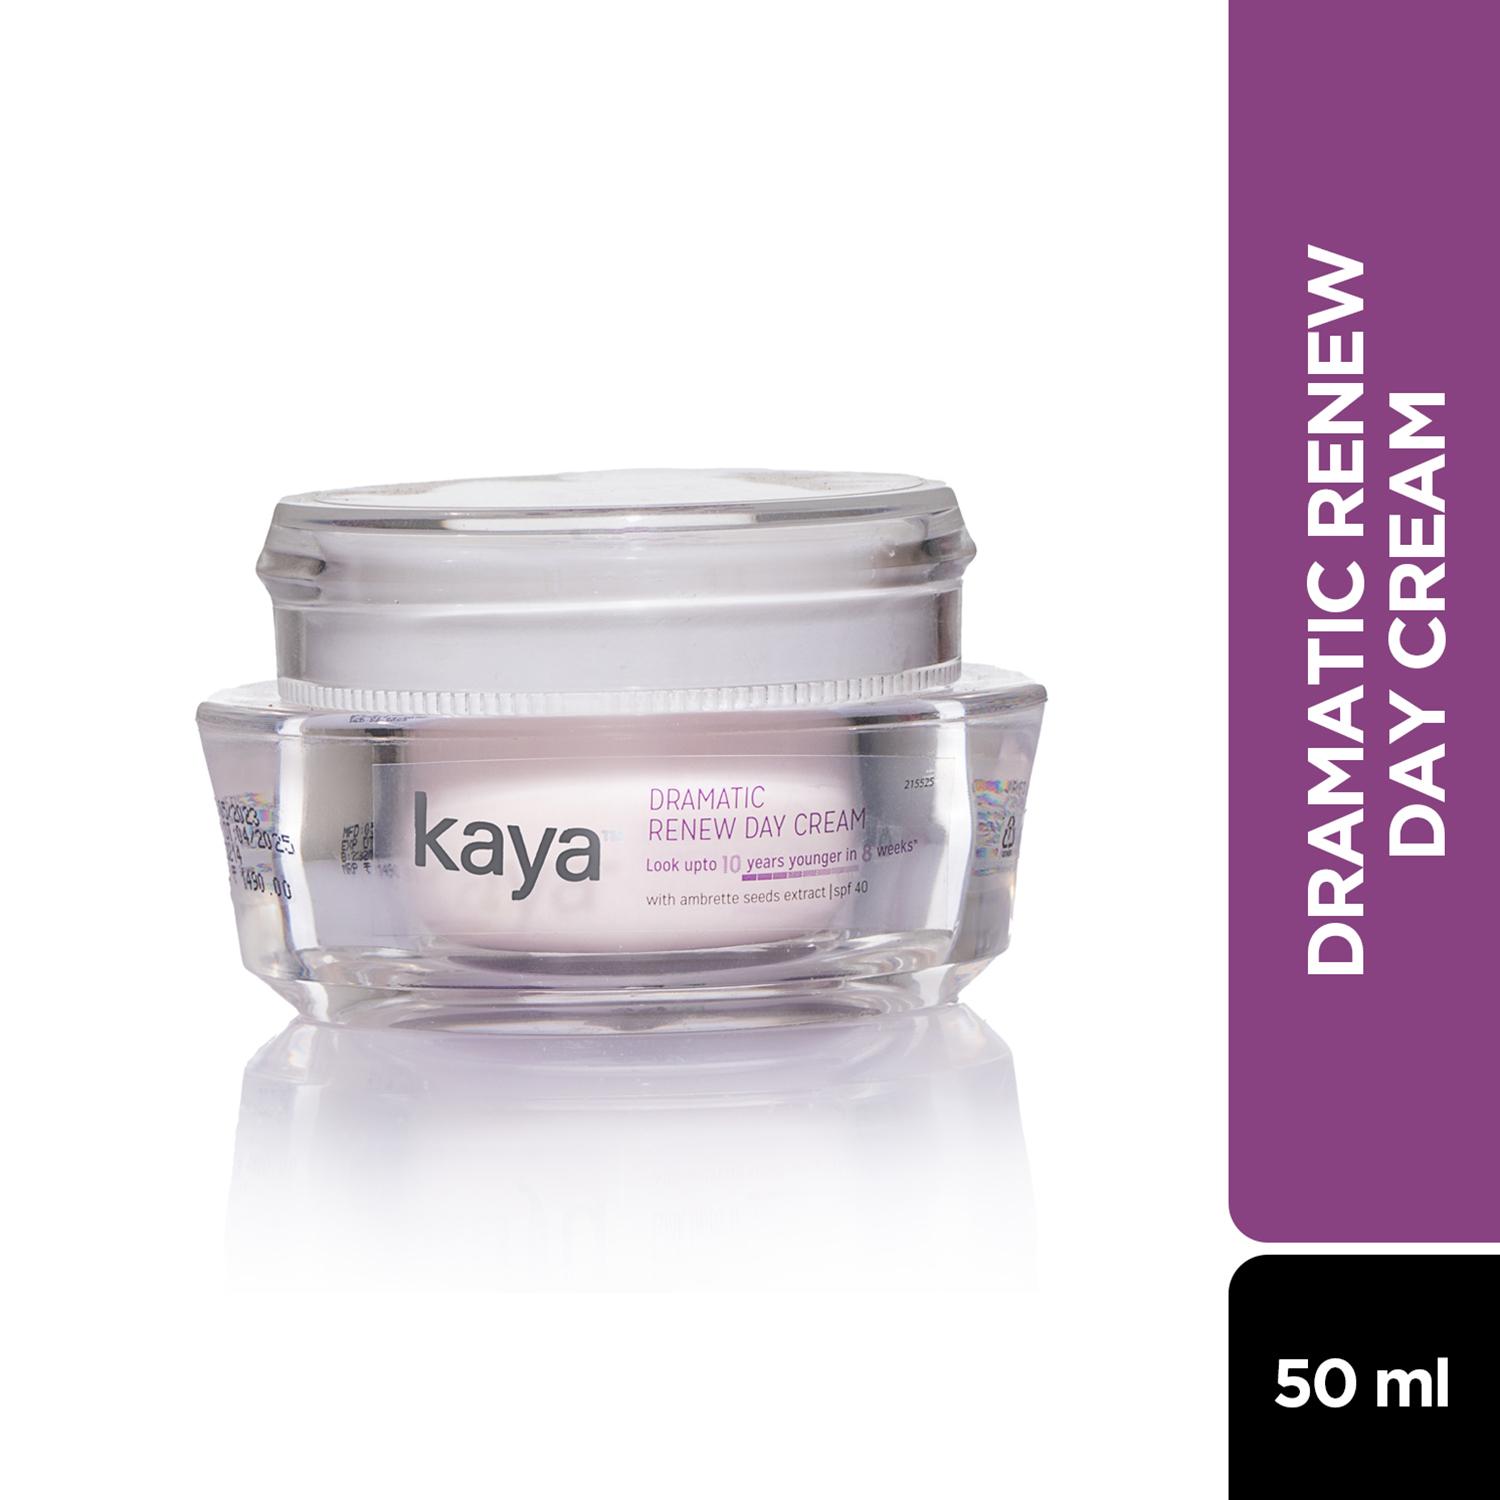 KAYA Dramatic Renew Day Cream - (50g)